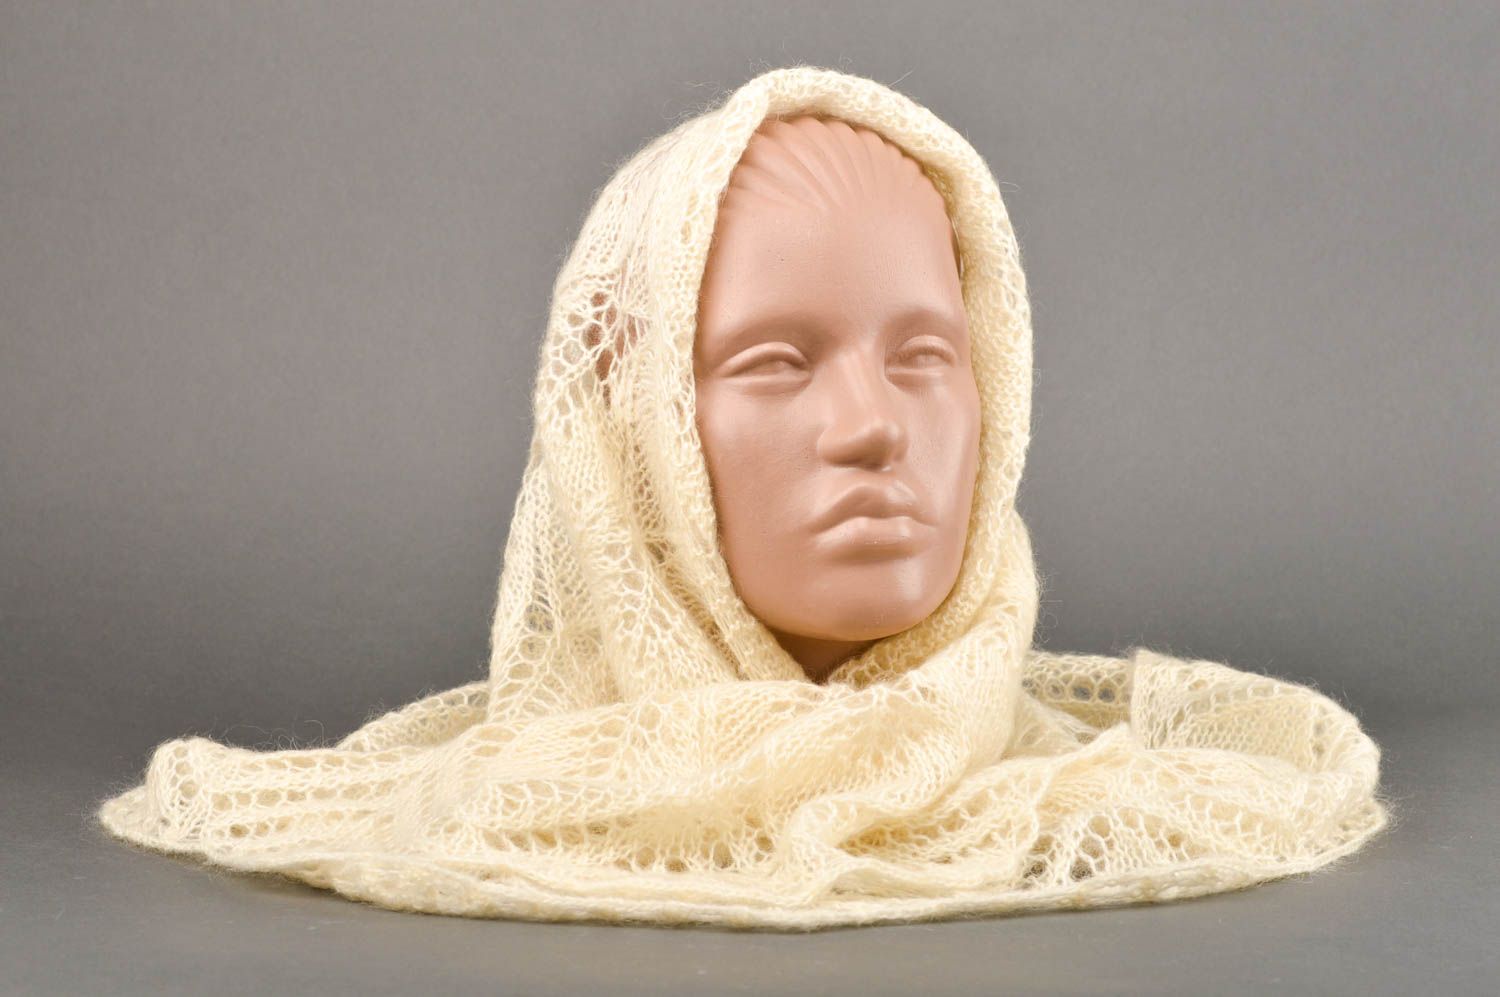 Crochet shawl handmade crochet scarf head scarf fashion accessories gift for her photo 1